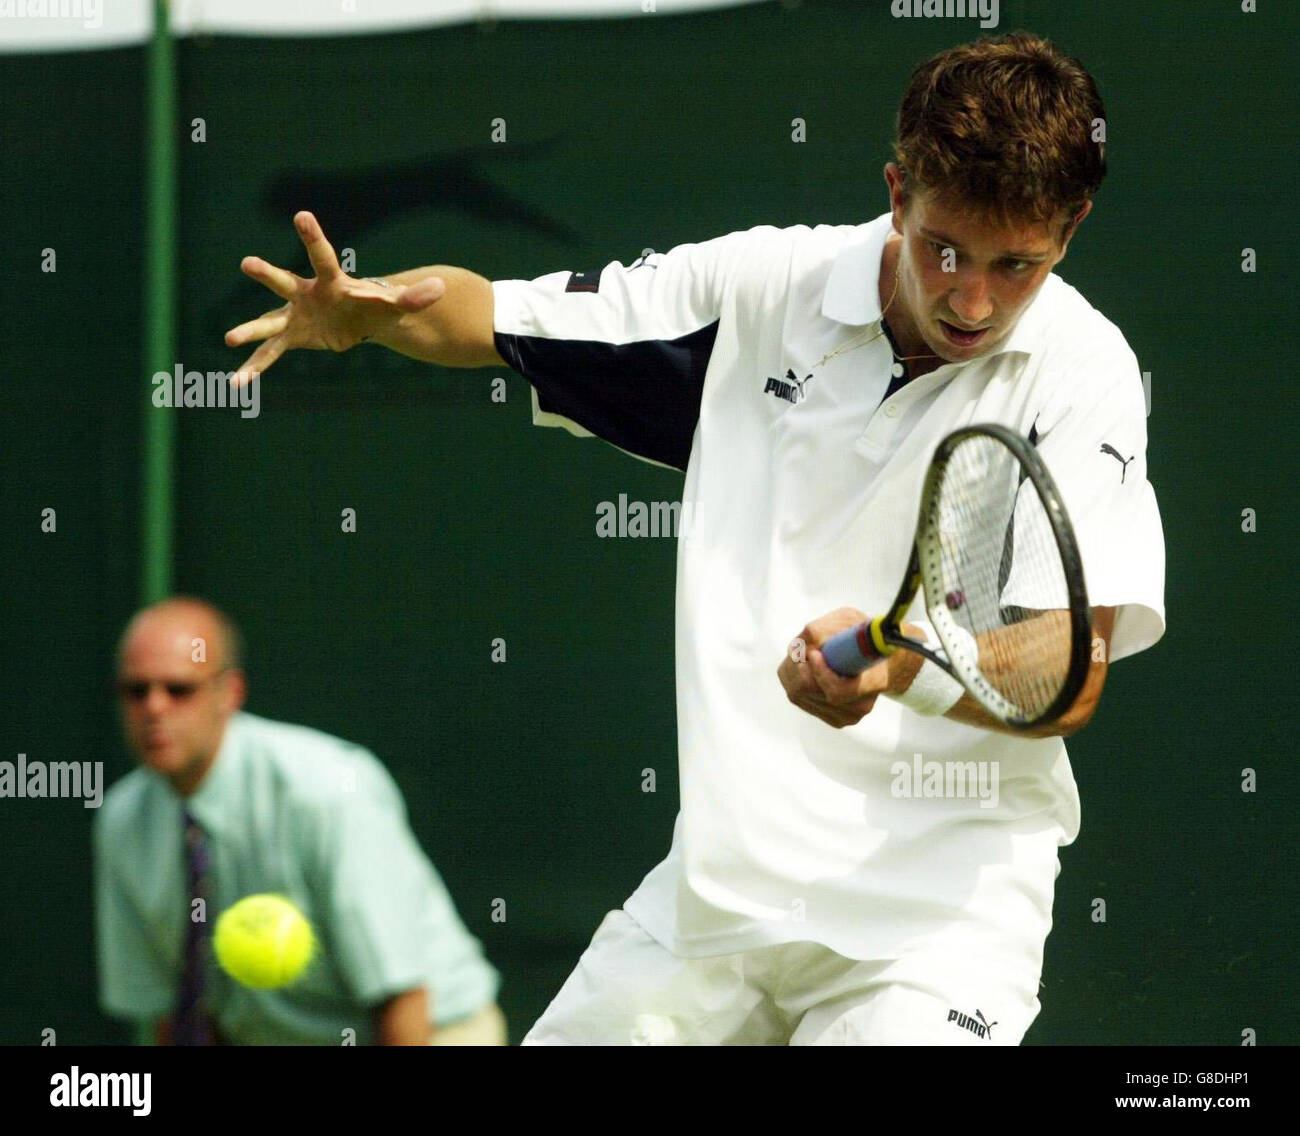 Tennis - Wimbledon Championships 2005 - Men's First Round - Alex Bogdanovic v Kevin Kim - All England Club. Great Britain's Alex Bogdanovic. Kevin Kim defeated Alex Bogdanovic 6-7, 6-1, 6-4, 6-2. Stock Photo